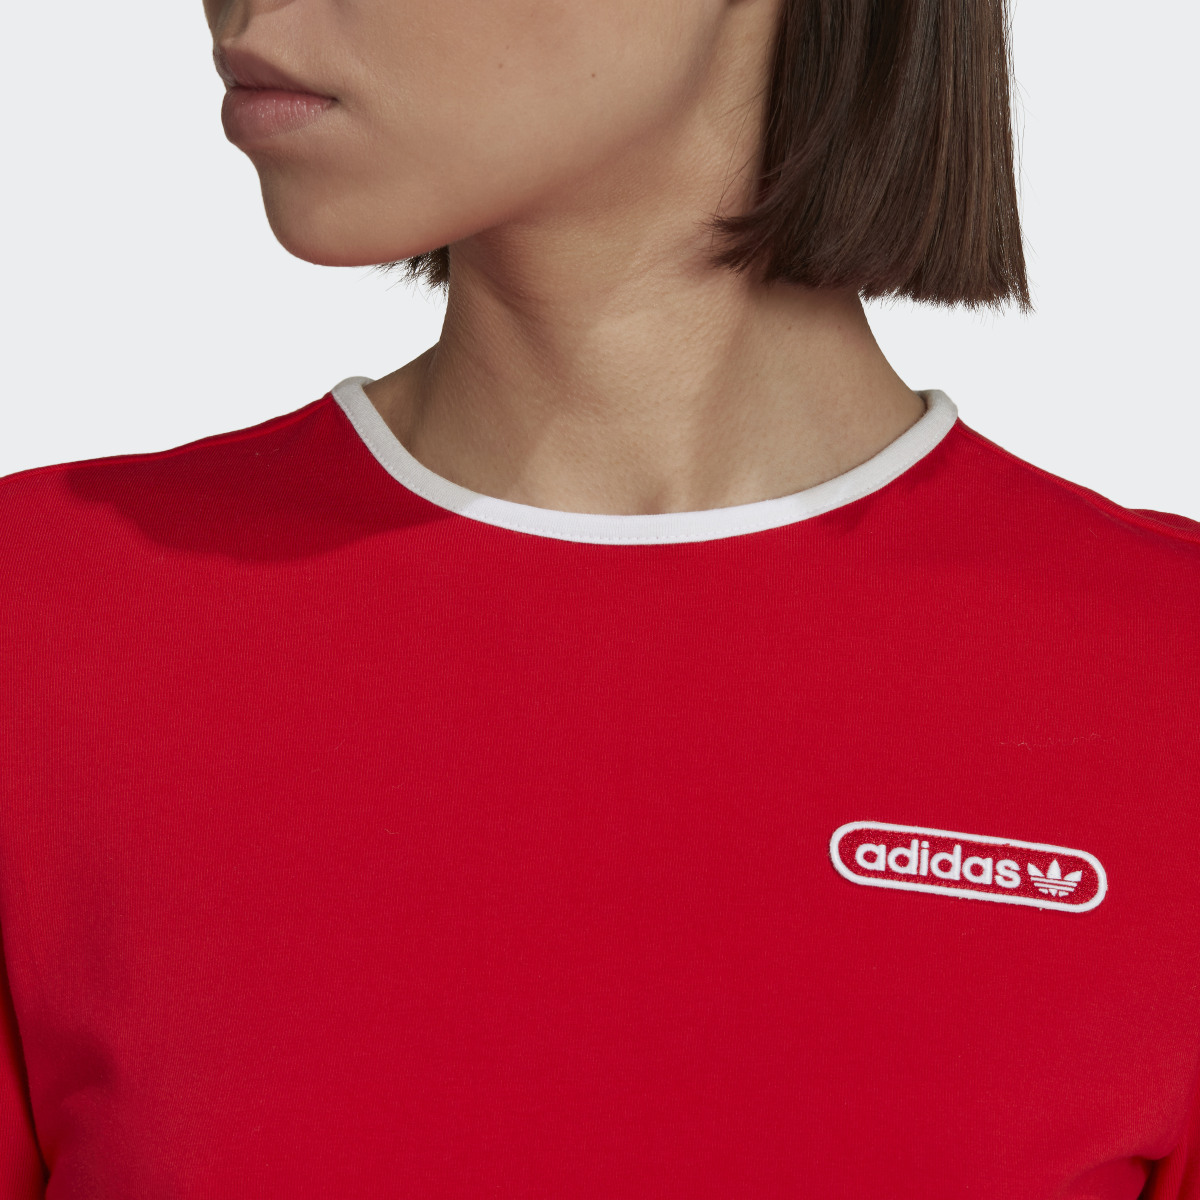 Adidas Crop T-Shirt with Binding Details. 6